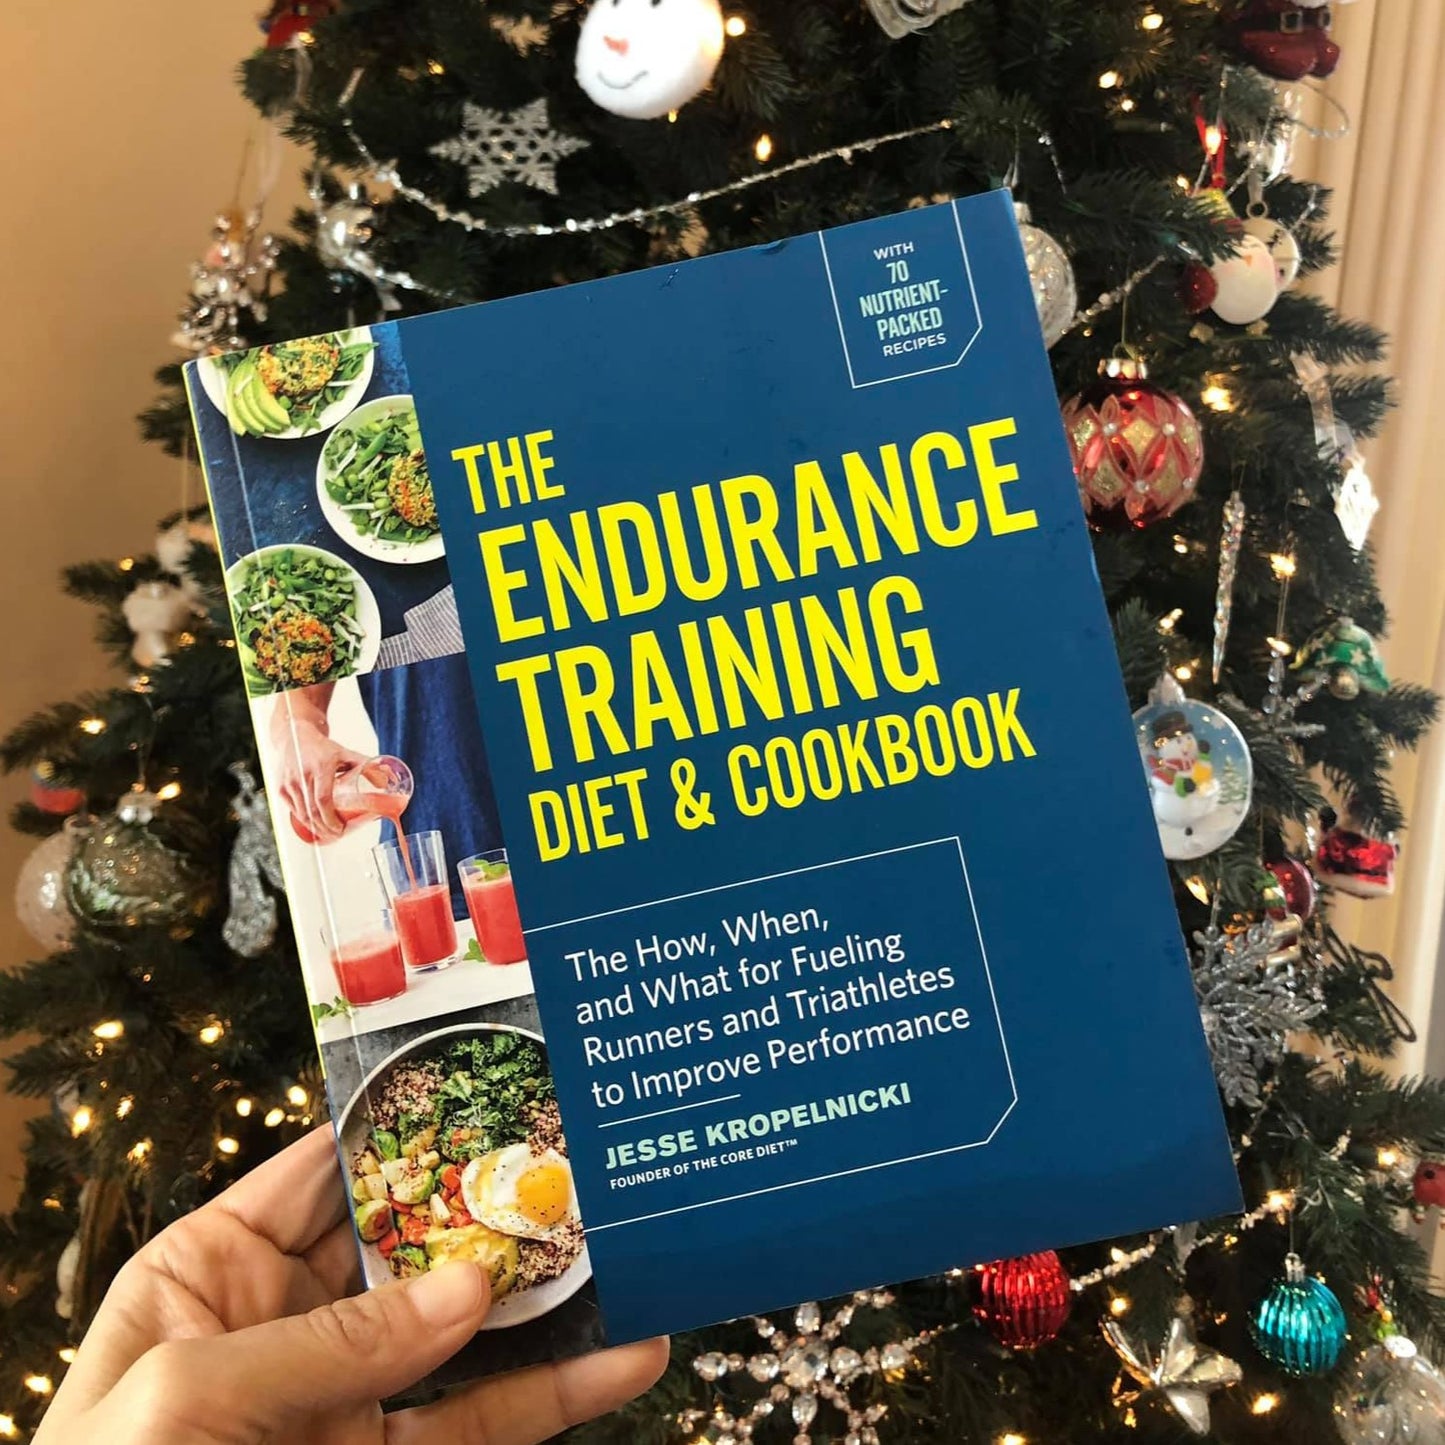 The Endurance Training Diet & Cookbook